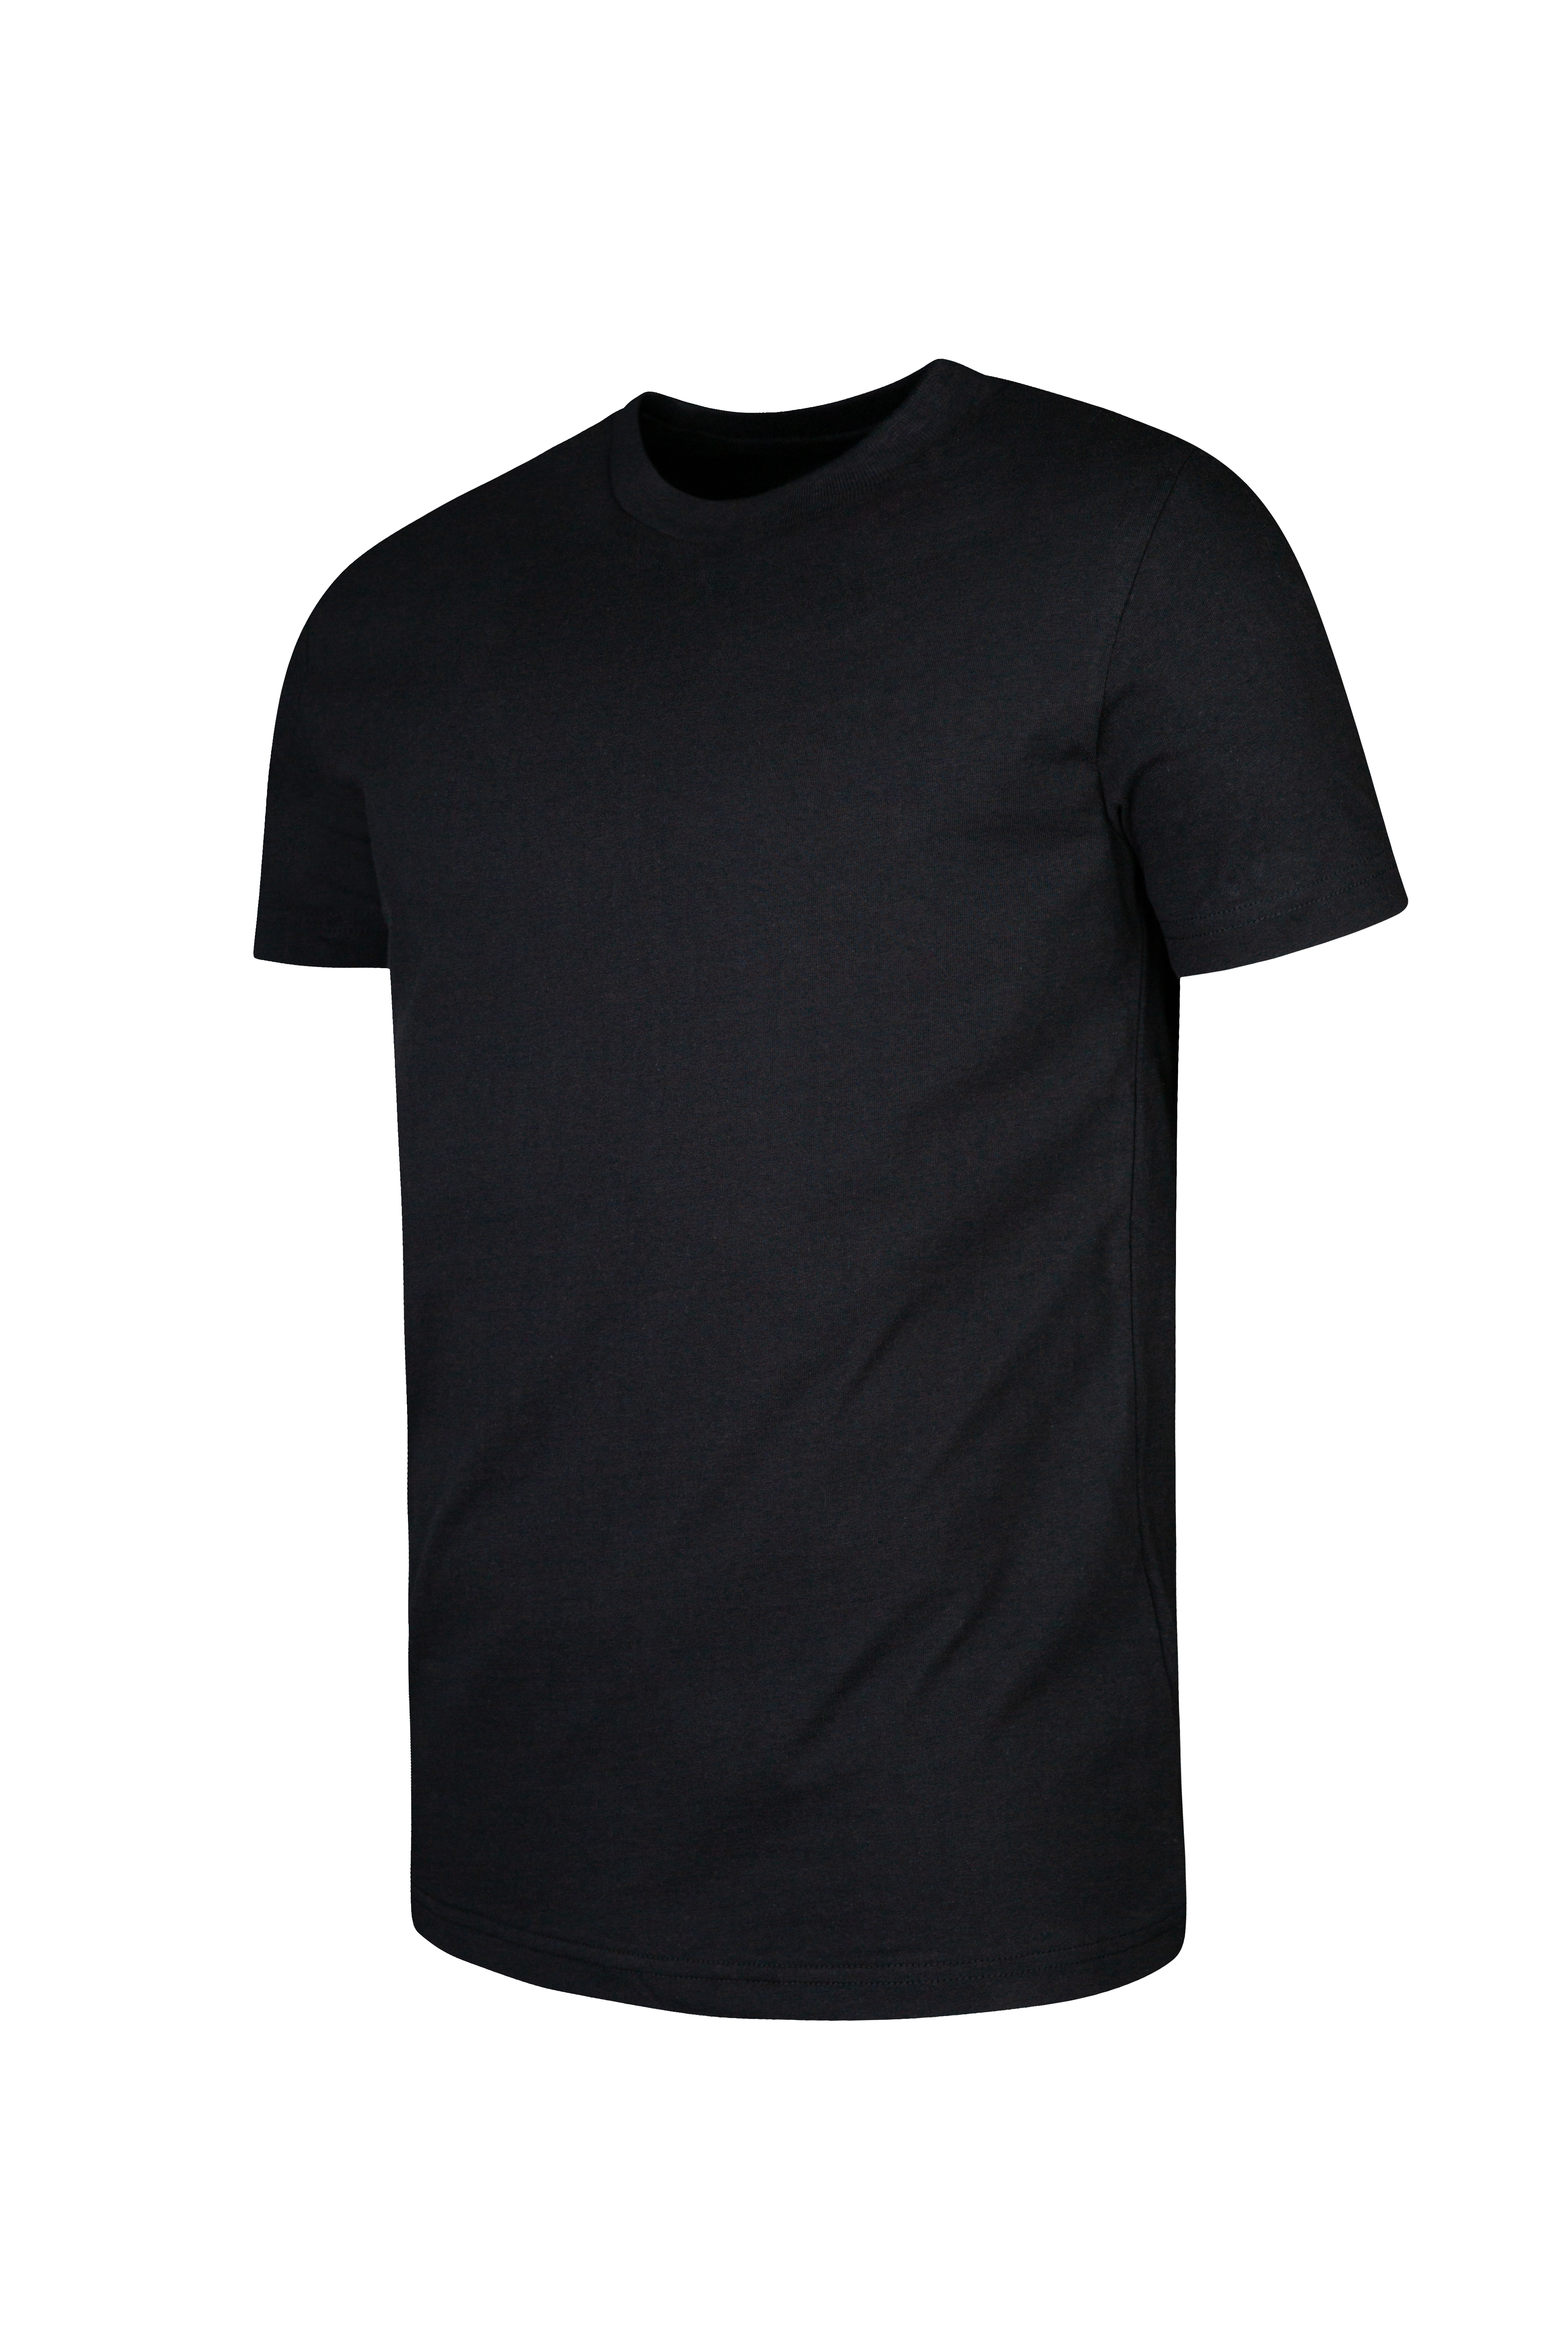 Black Short Sleeve T-Shirt Short